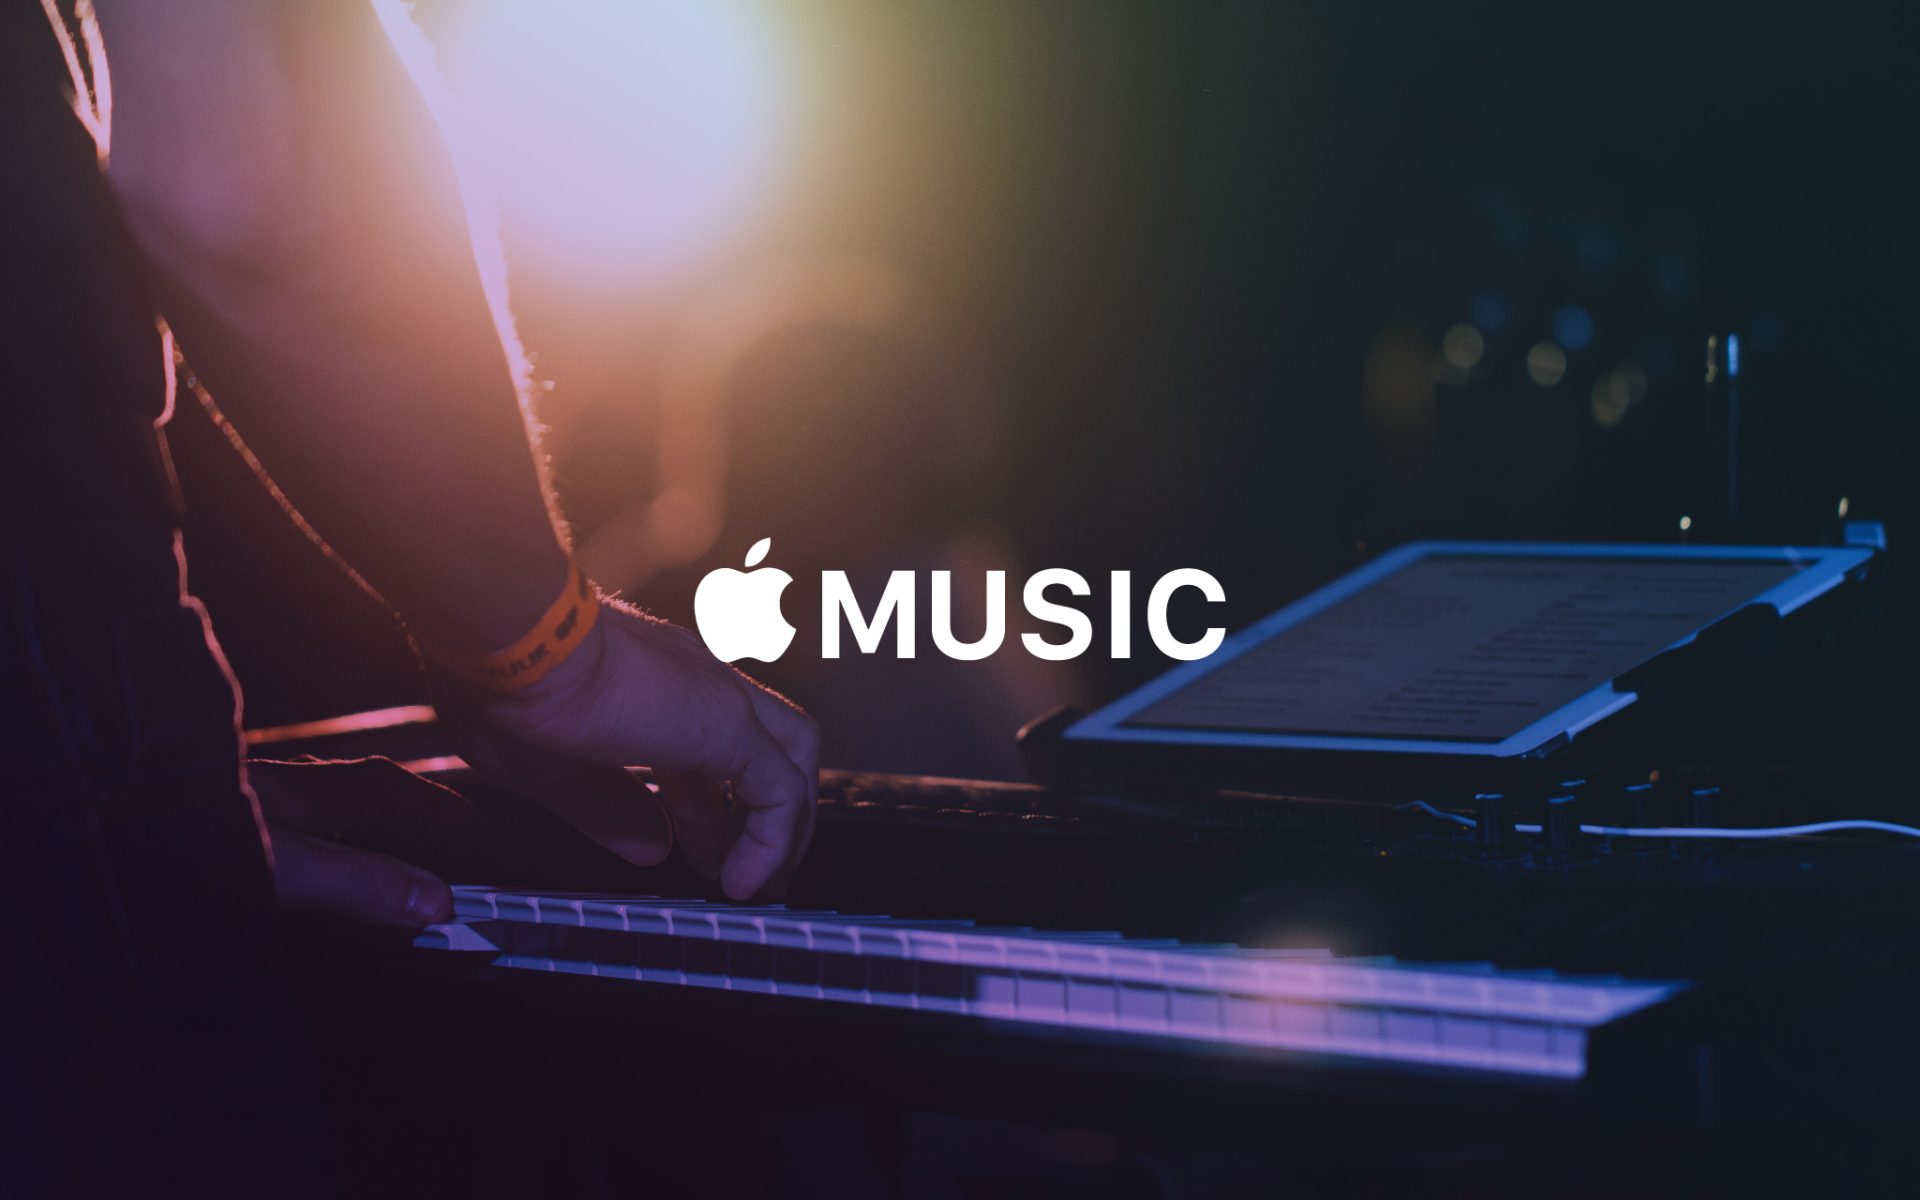 Apple Musicで出会った新しい音楽たち 2020